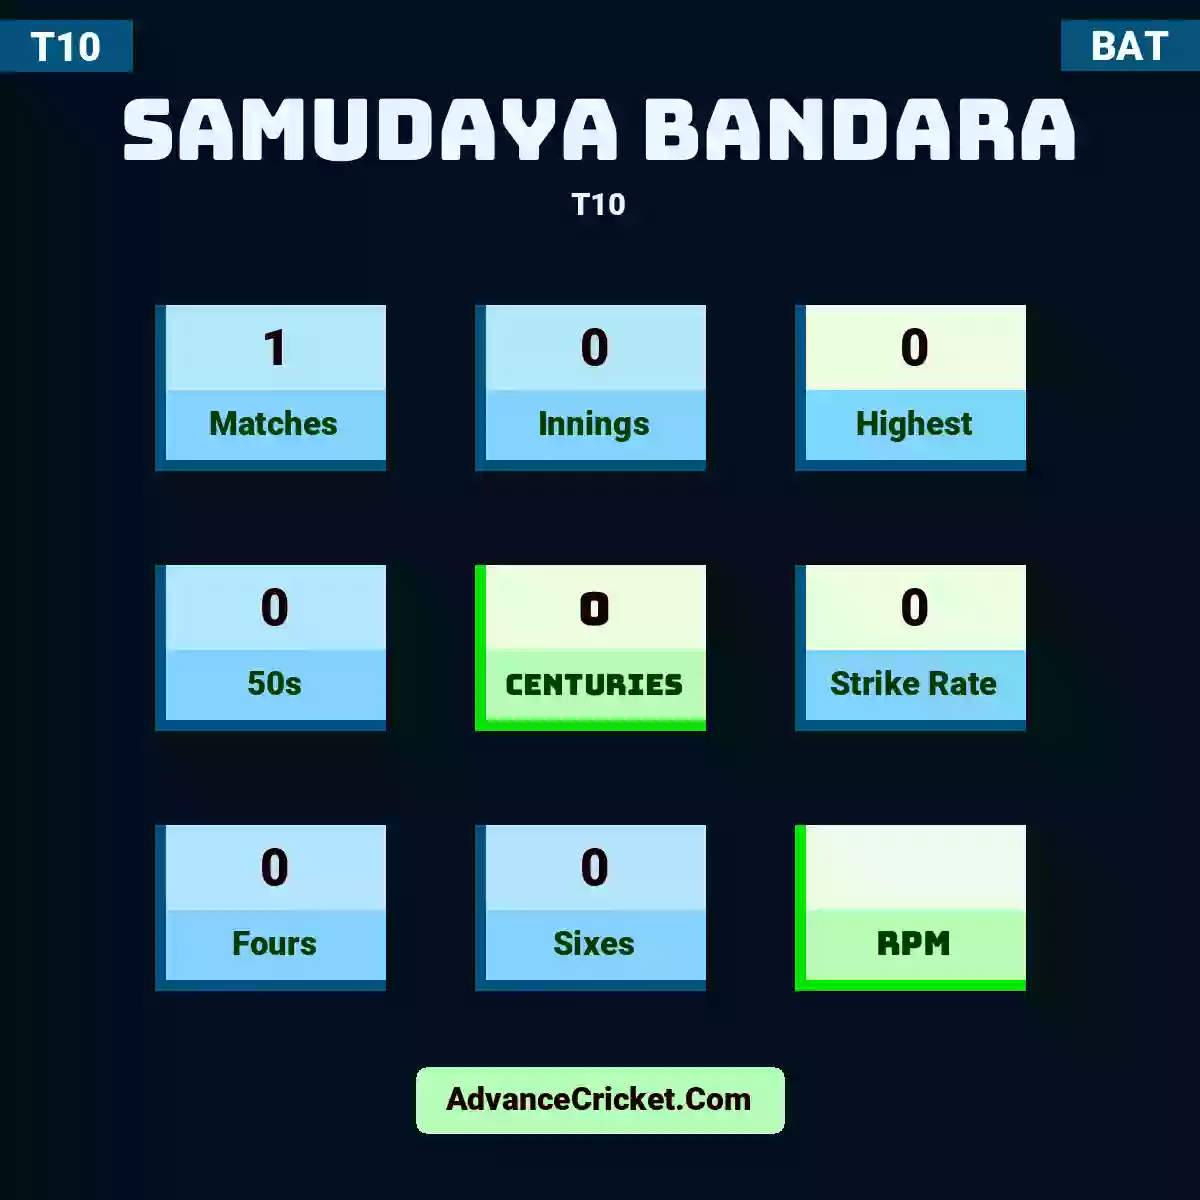 Samudaya Bandara T10 , Samudaya Bandara played 1 matches, scored 0 runs as highest, 0 half-centuries, and 0 centuries, with a strike rate of 0. S.Bandara hit 0 fours and 0 sixes.